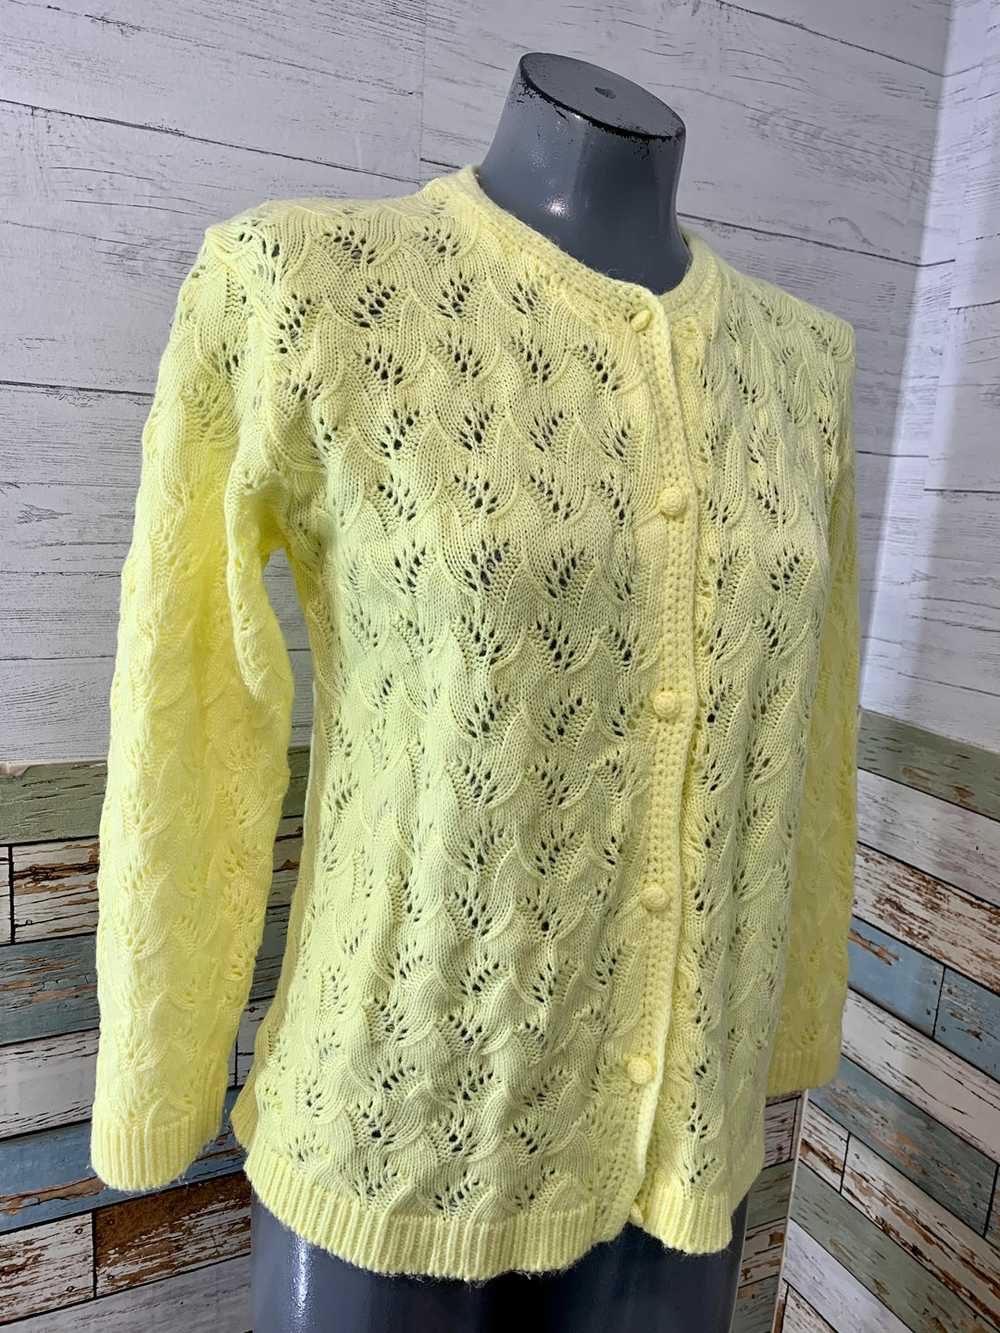 70’s Bright Yellow Knit Cardigan Sweater - image 4